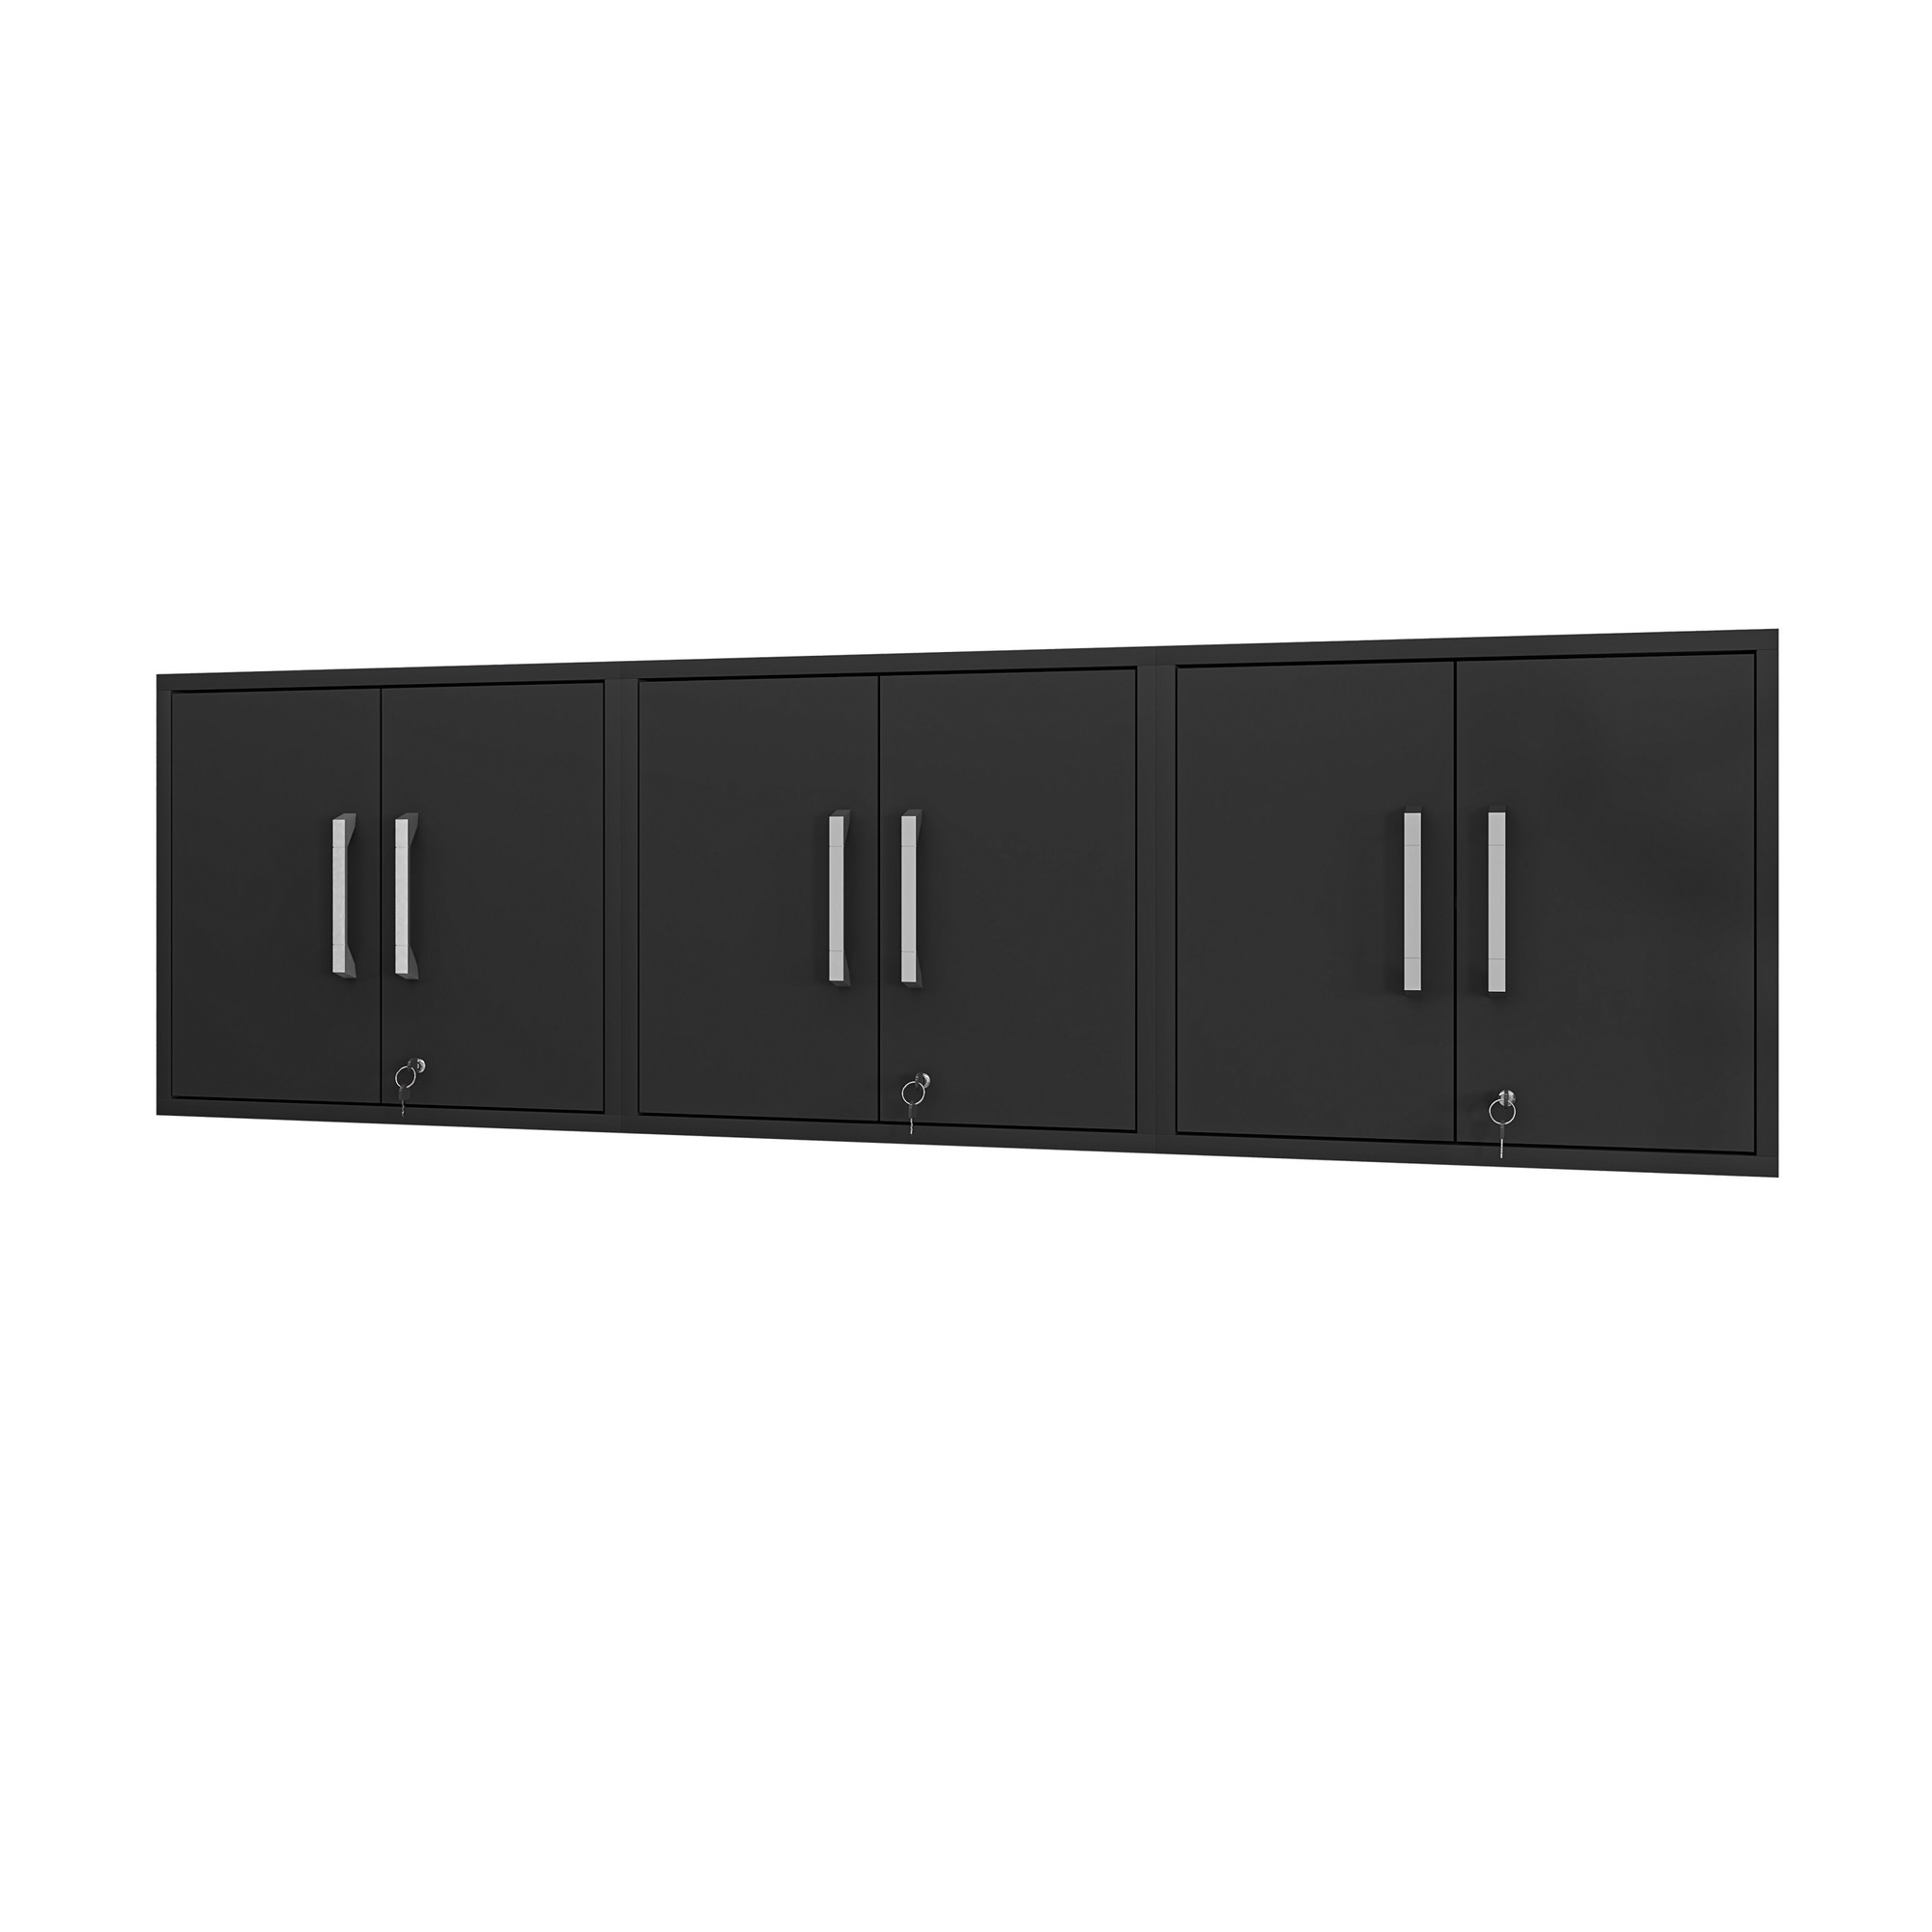 Manhattan Comfort, Eiffel Floating Garage Cabinet in Black Set of 3 Height 25.59 in, Width 85.05 in, Color Black, Model 3-251BMC